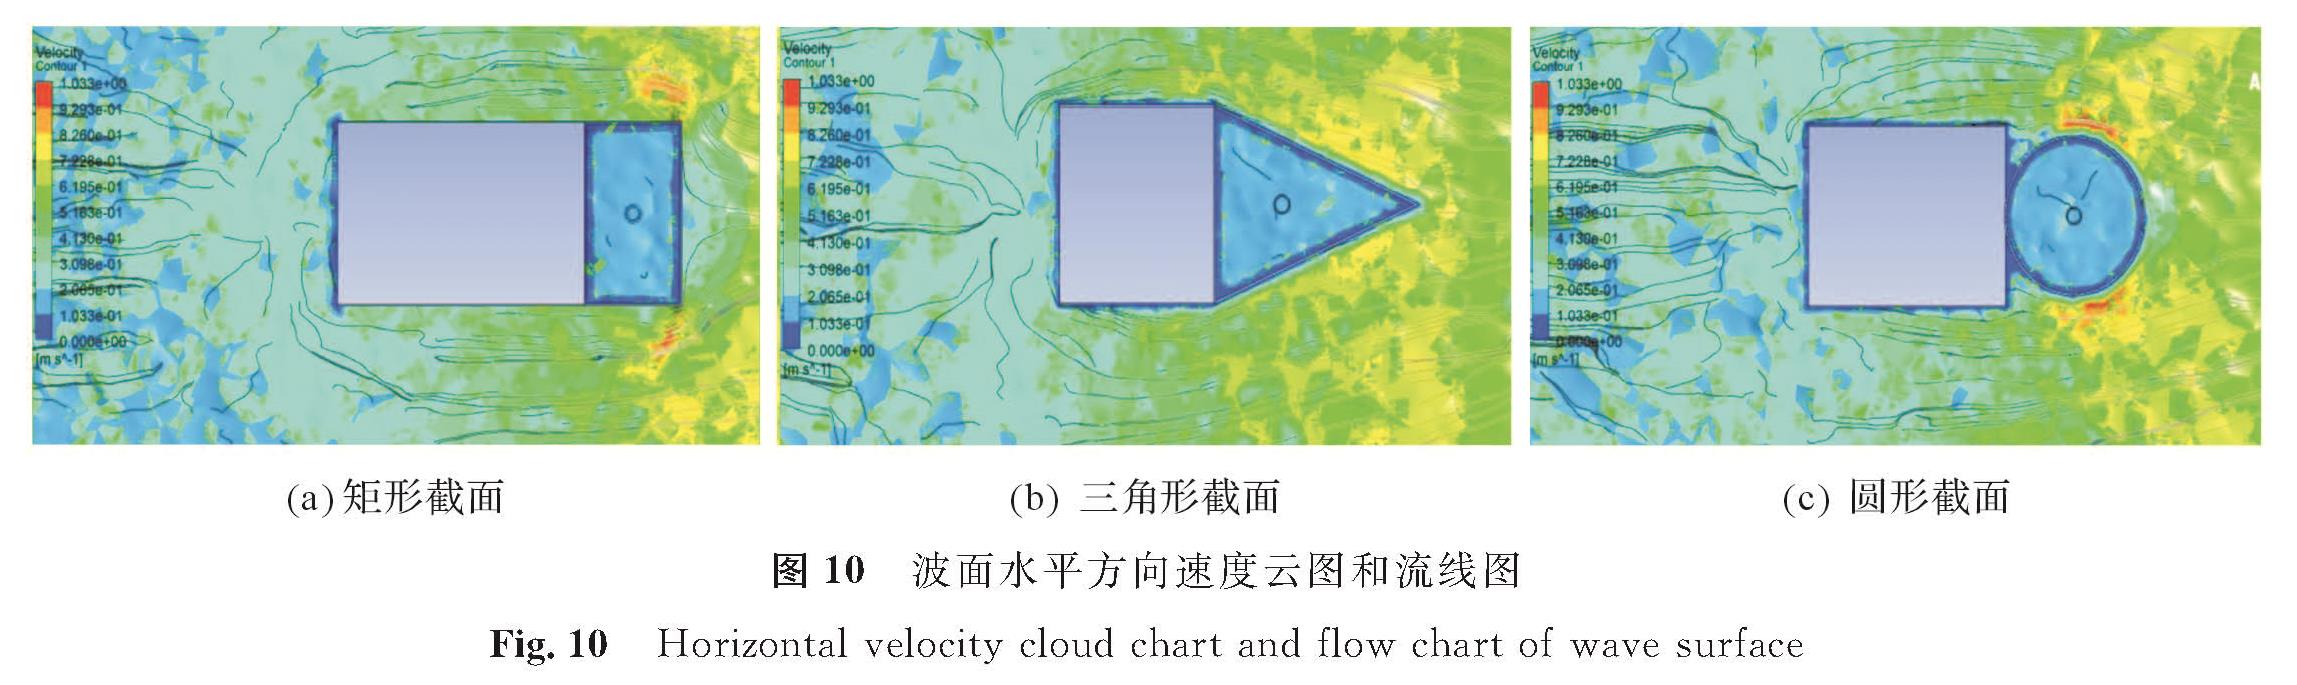 图 10 波面水平方向速度云图和流线图<br/>Fig.10 Horizontal velocity cloud chart and flow chart of wave surface